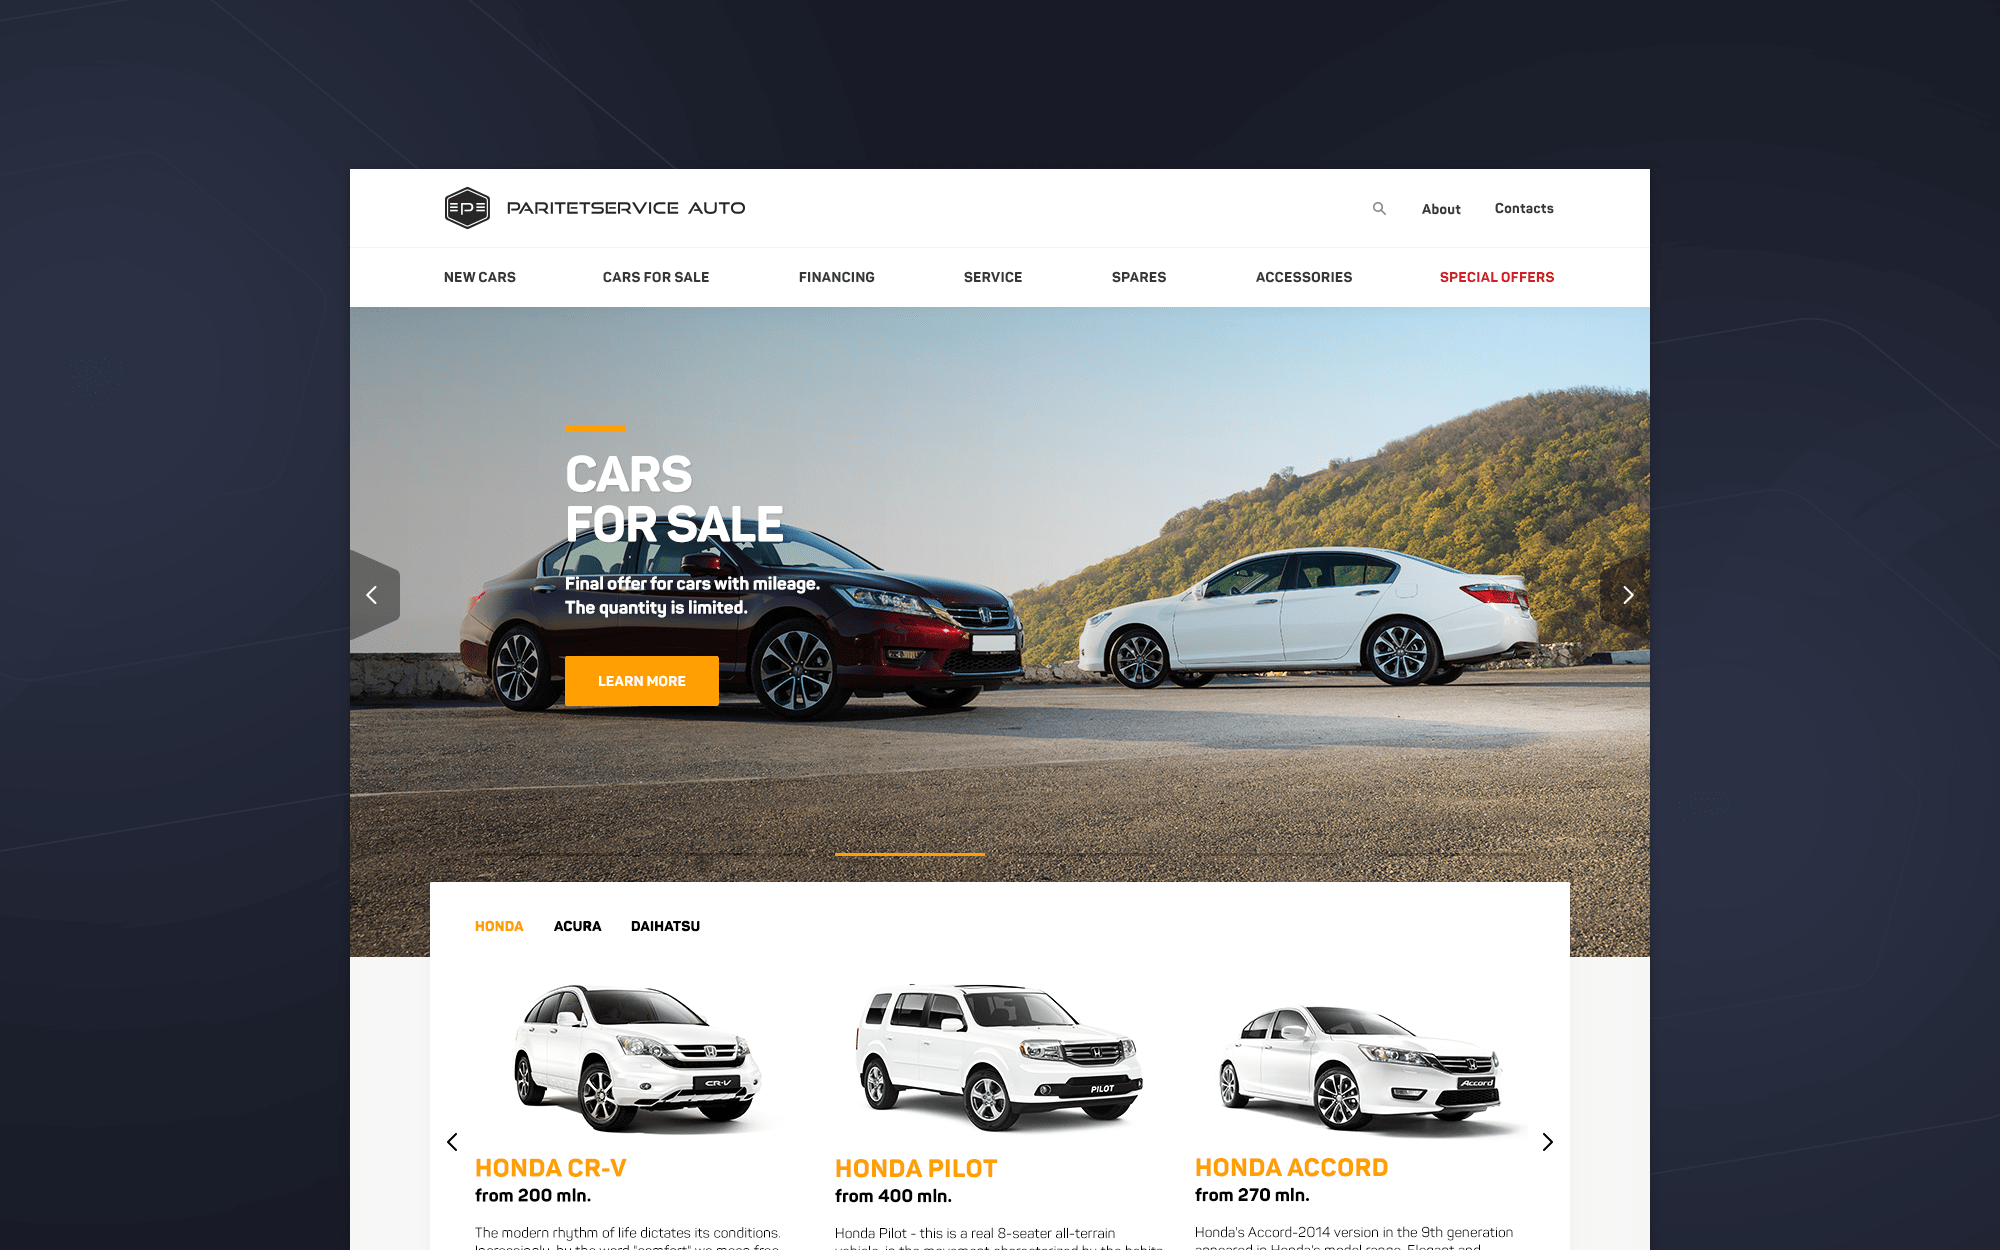 Honda dealer web-site's main page design